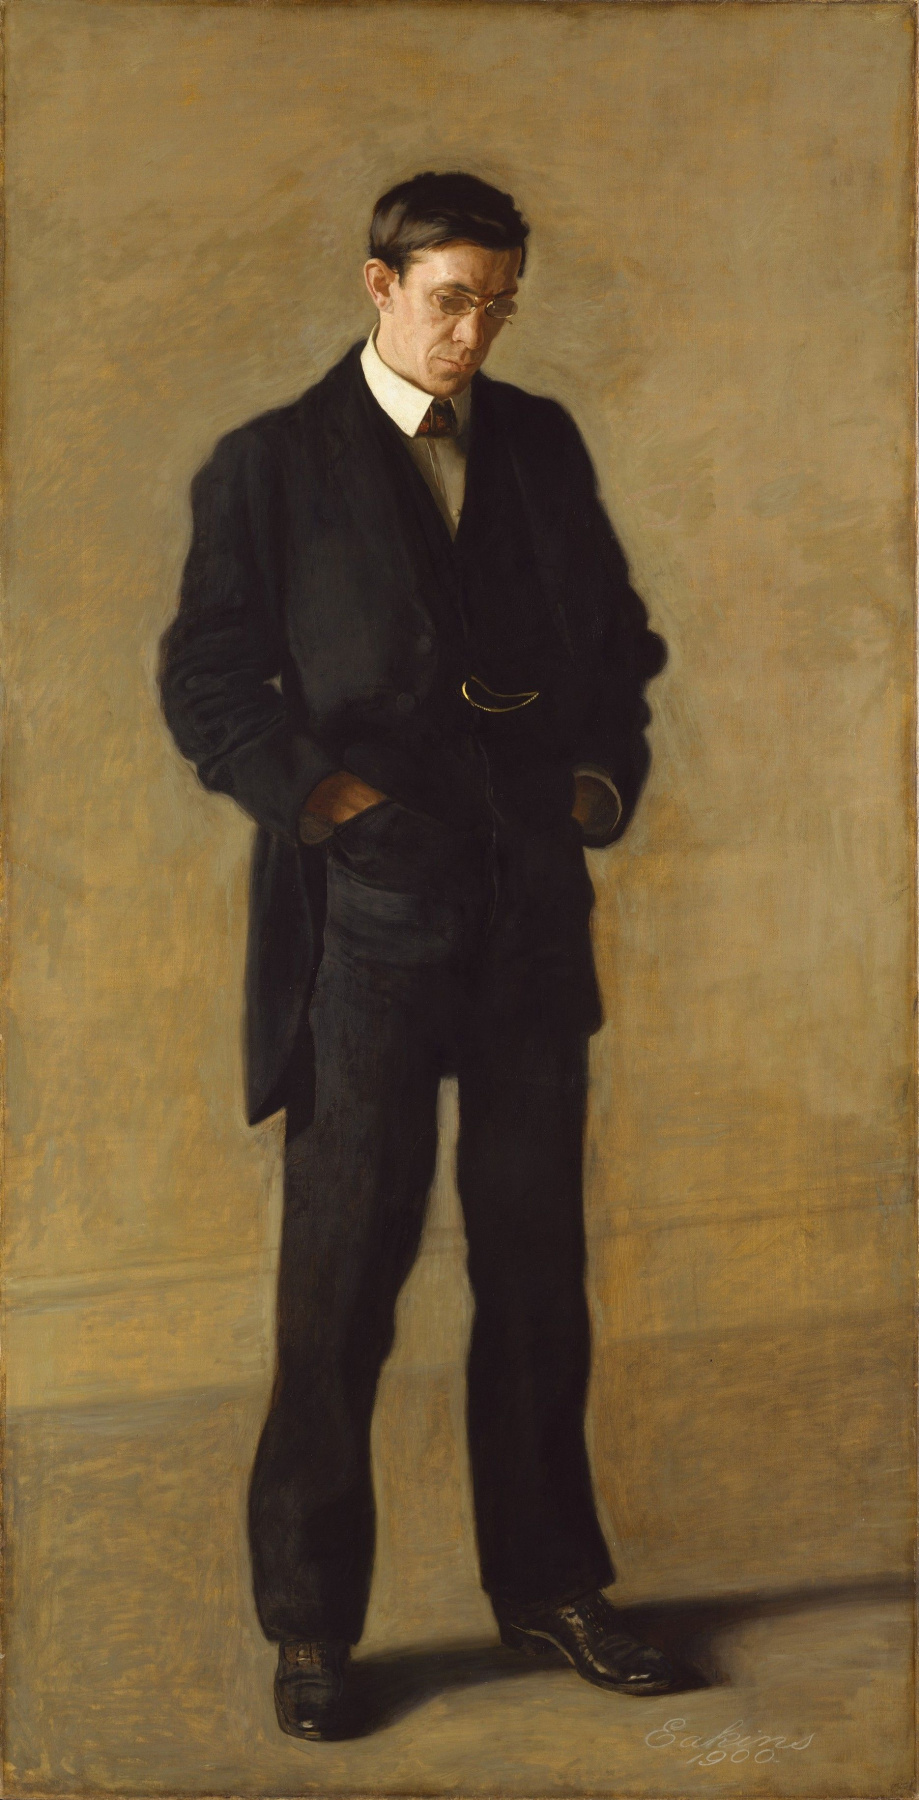 Thomas Eakins. The thinker, portrait of Louis N. Kenton